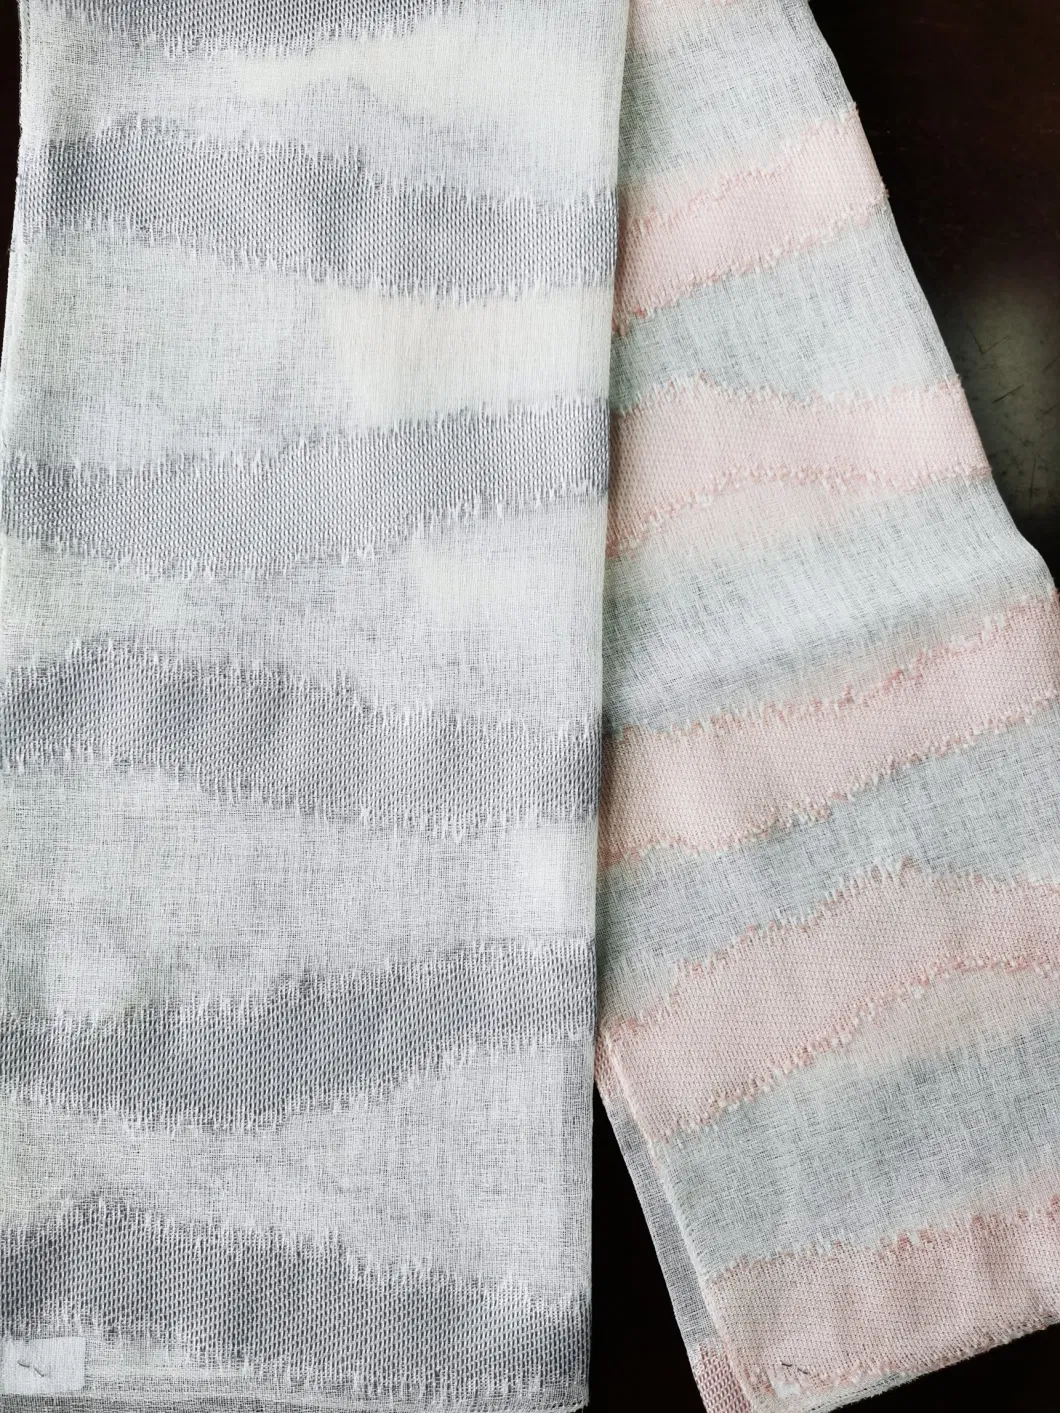 New Arrival Zebra Design of 100% Polyester Jacqarud Curtain Fabric